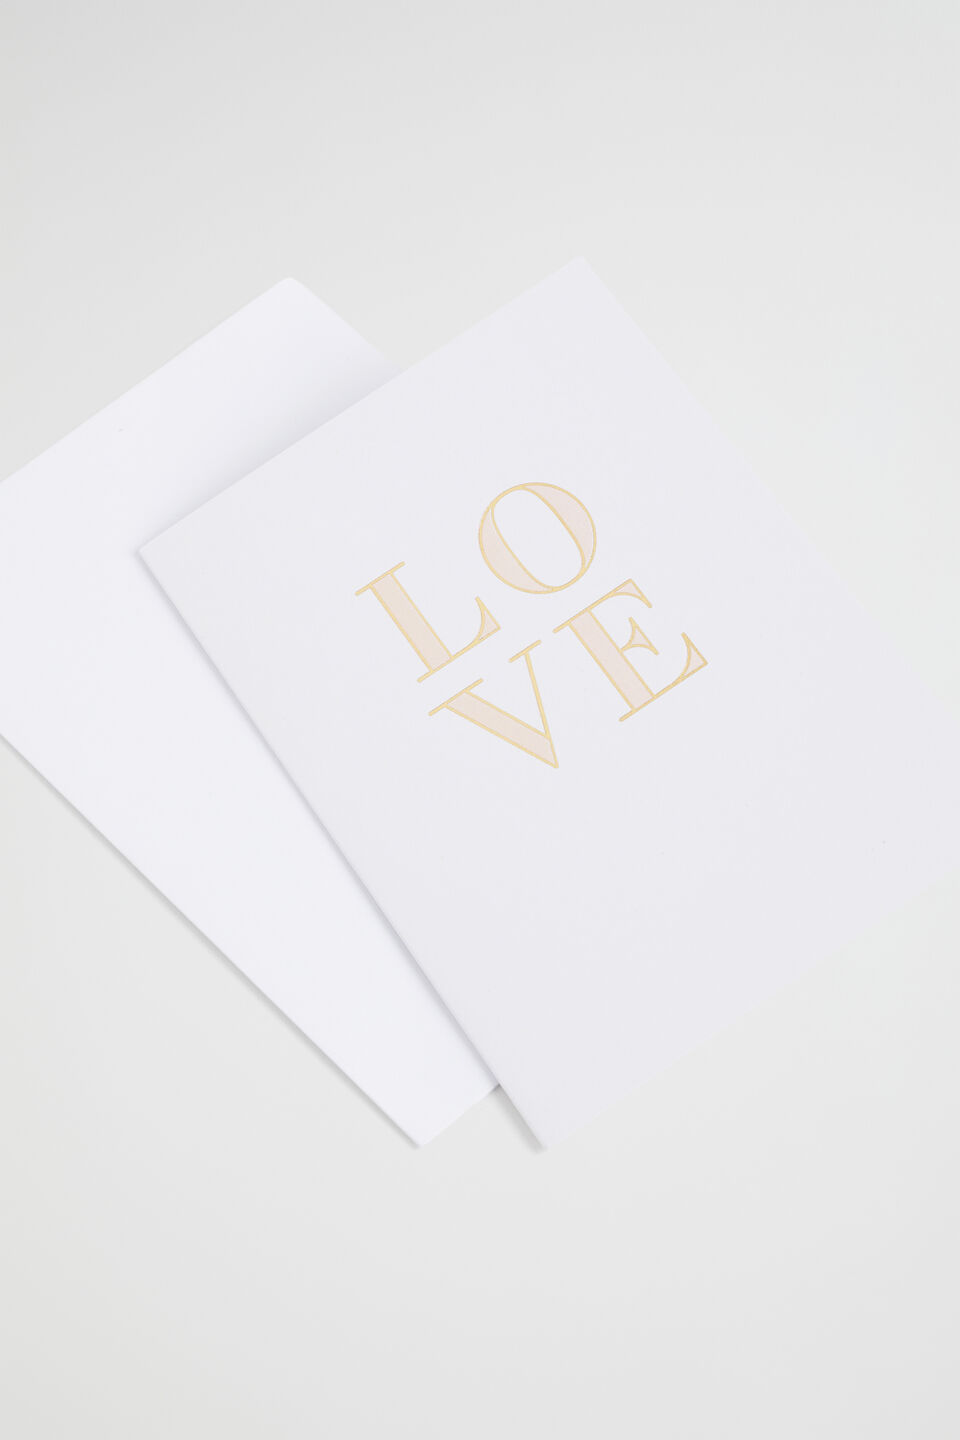 Greeting Card  Love